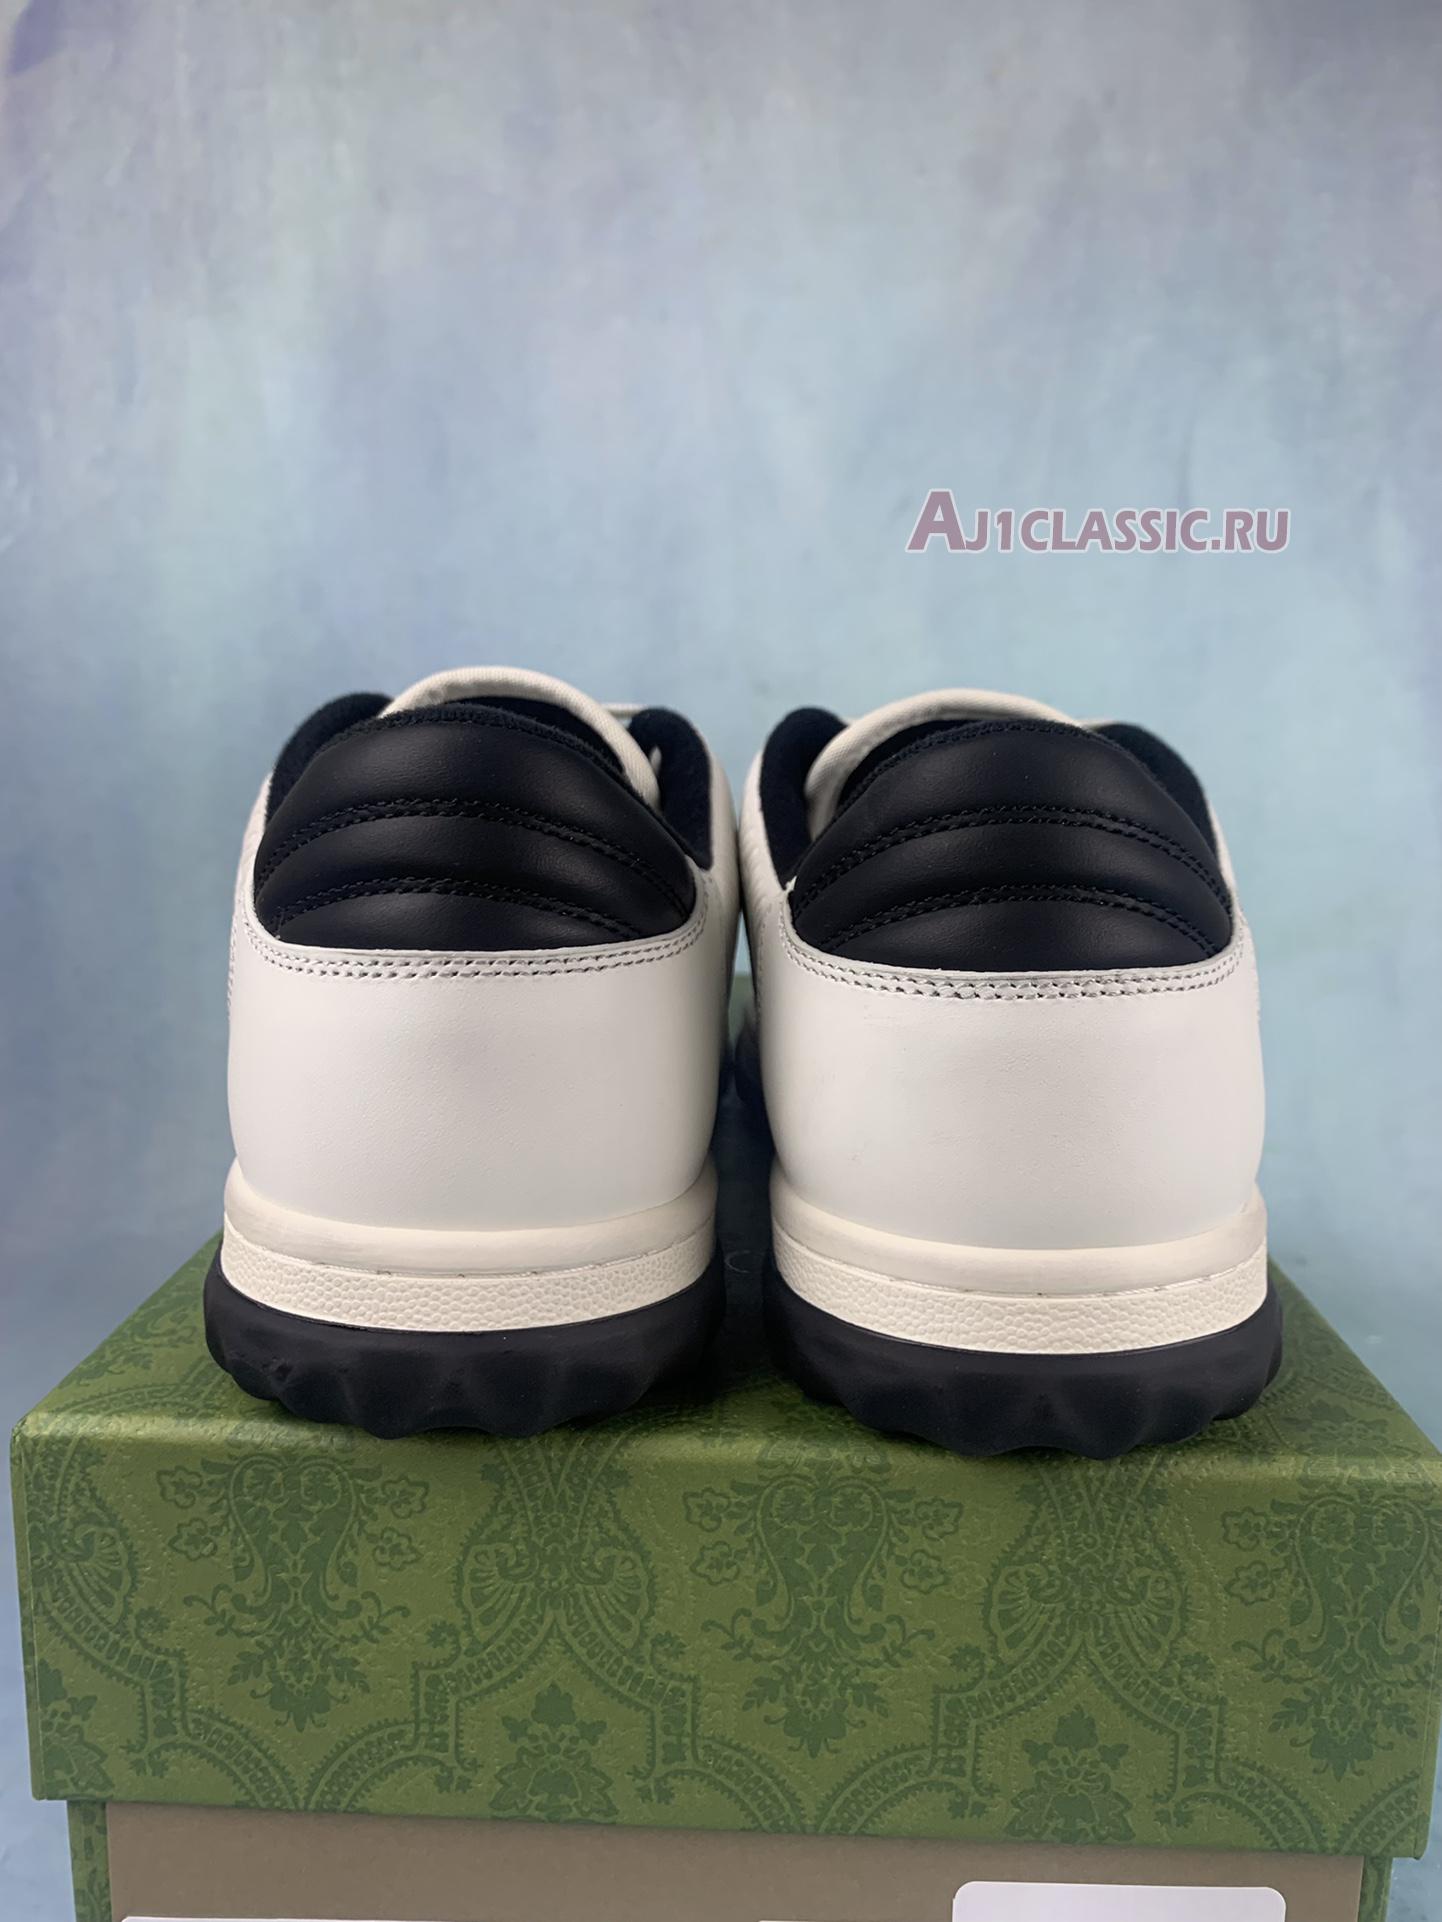 Gucci MAC80 Sneaker "Off White Black" 741656 AAB79 9151